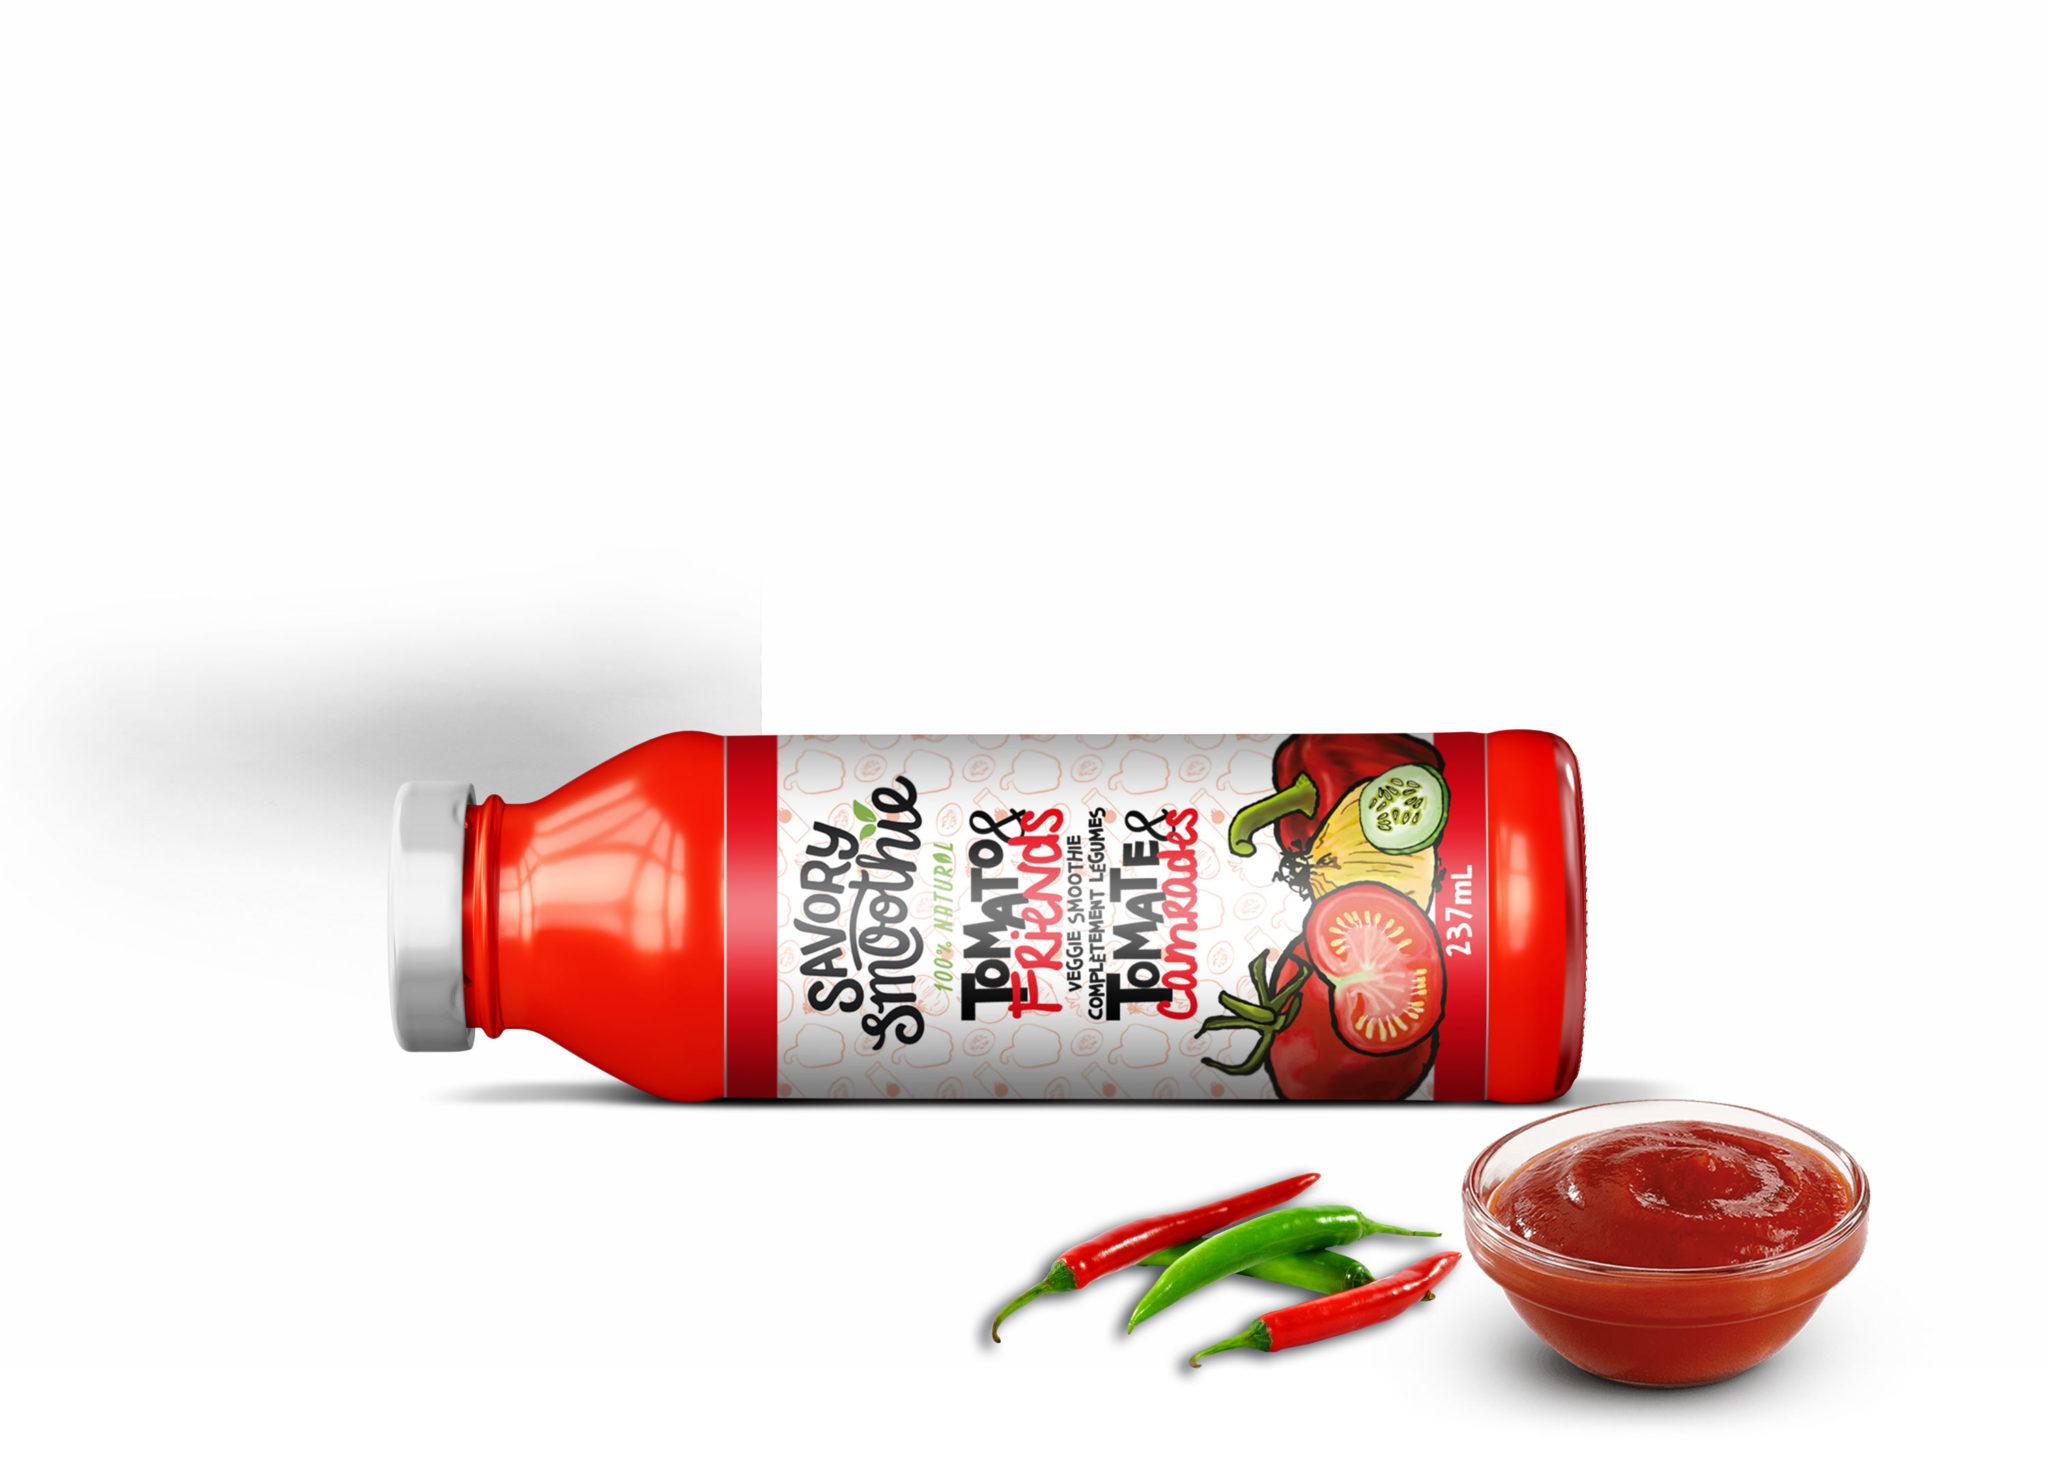 Tomato Ketchup Bottle Mockup